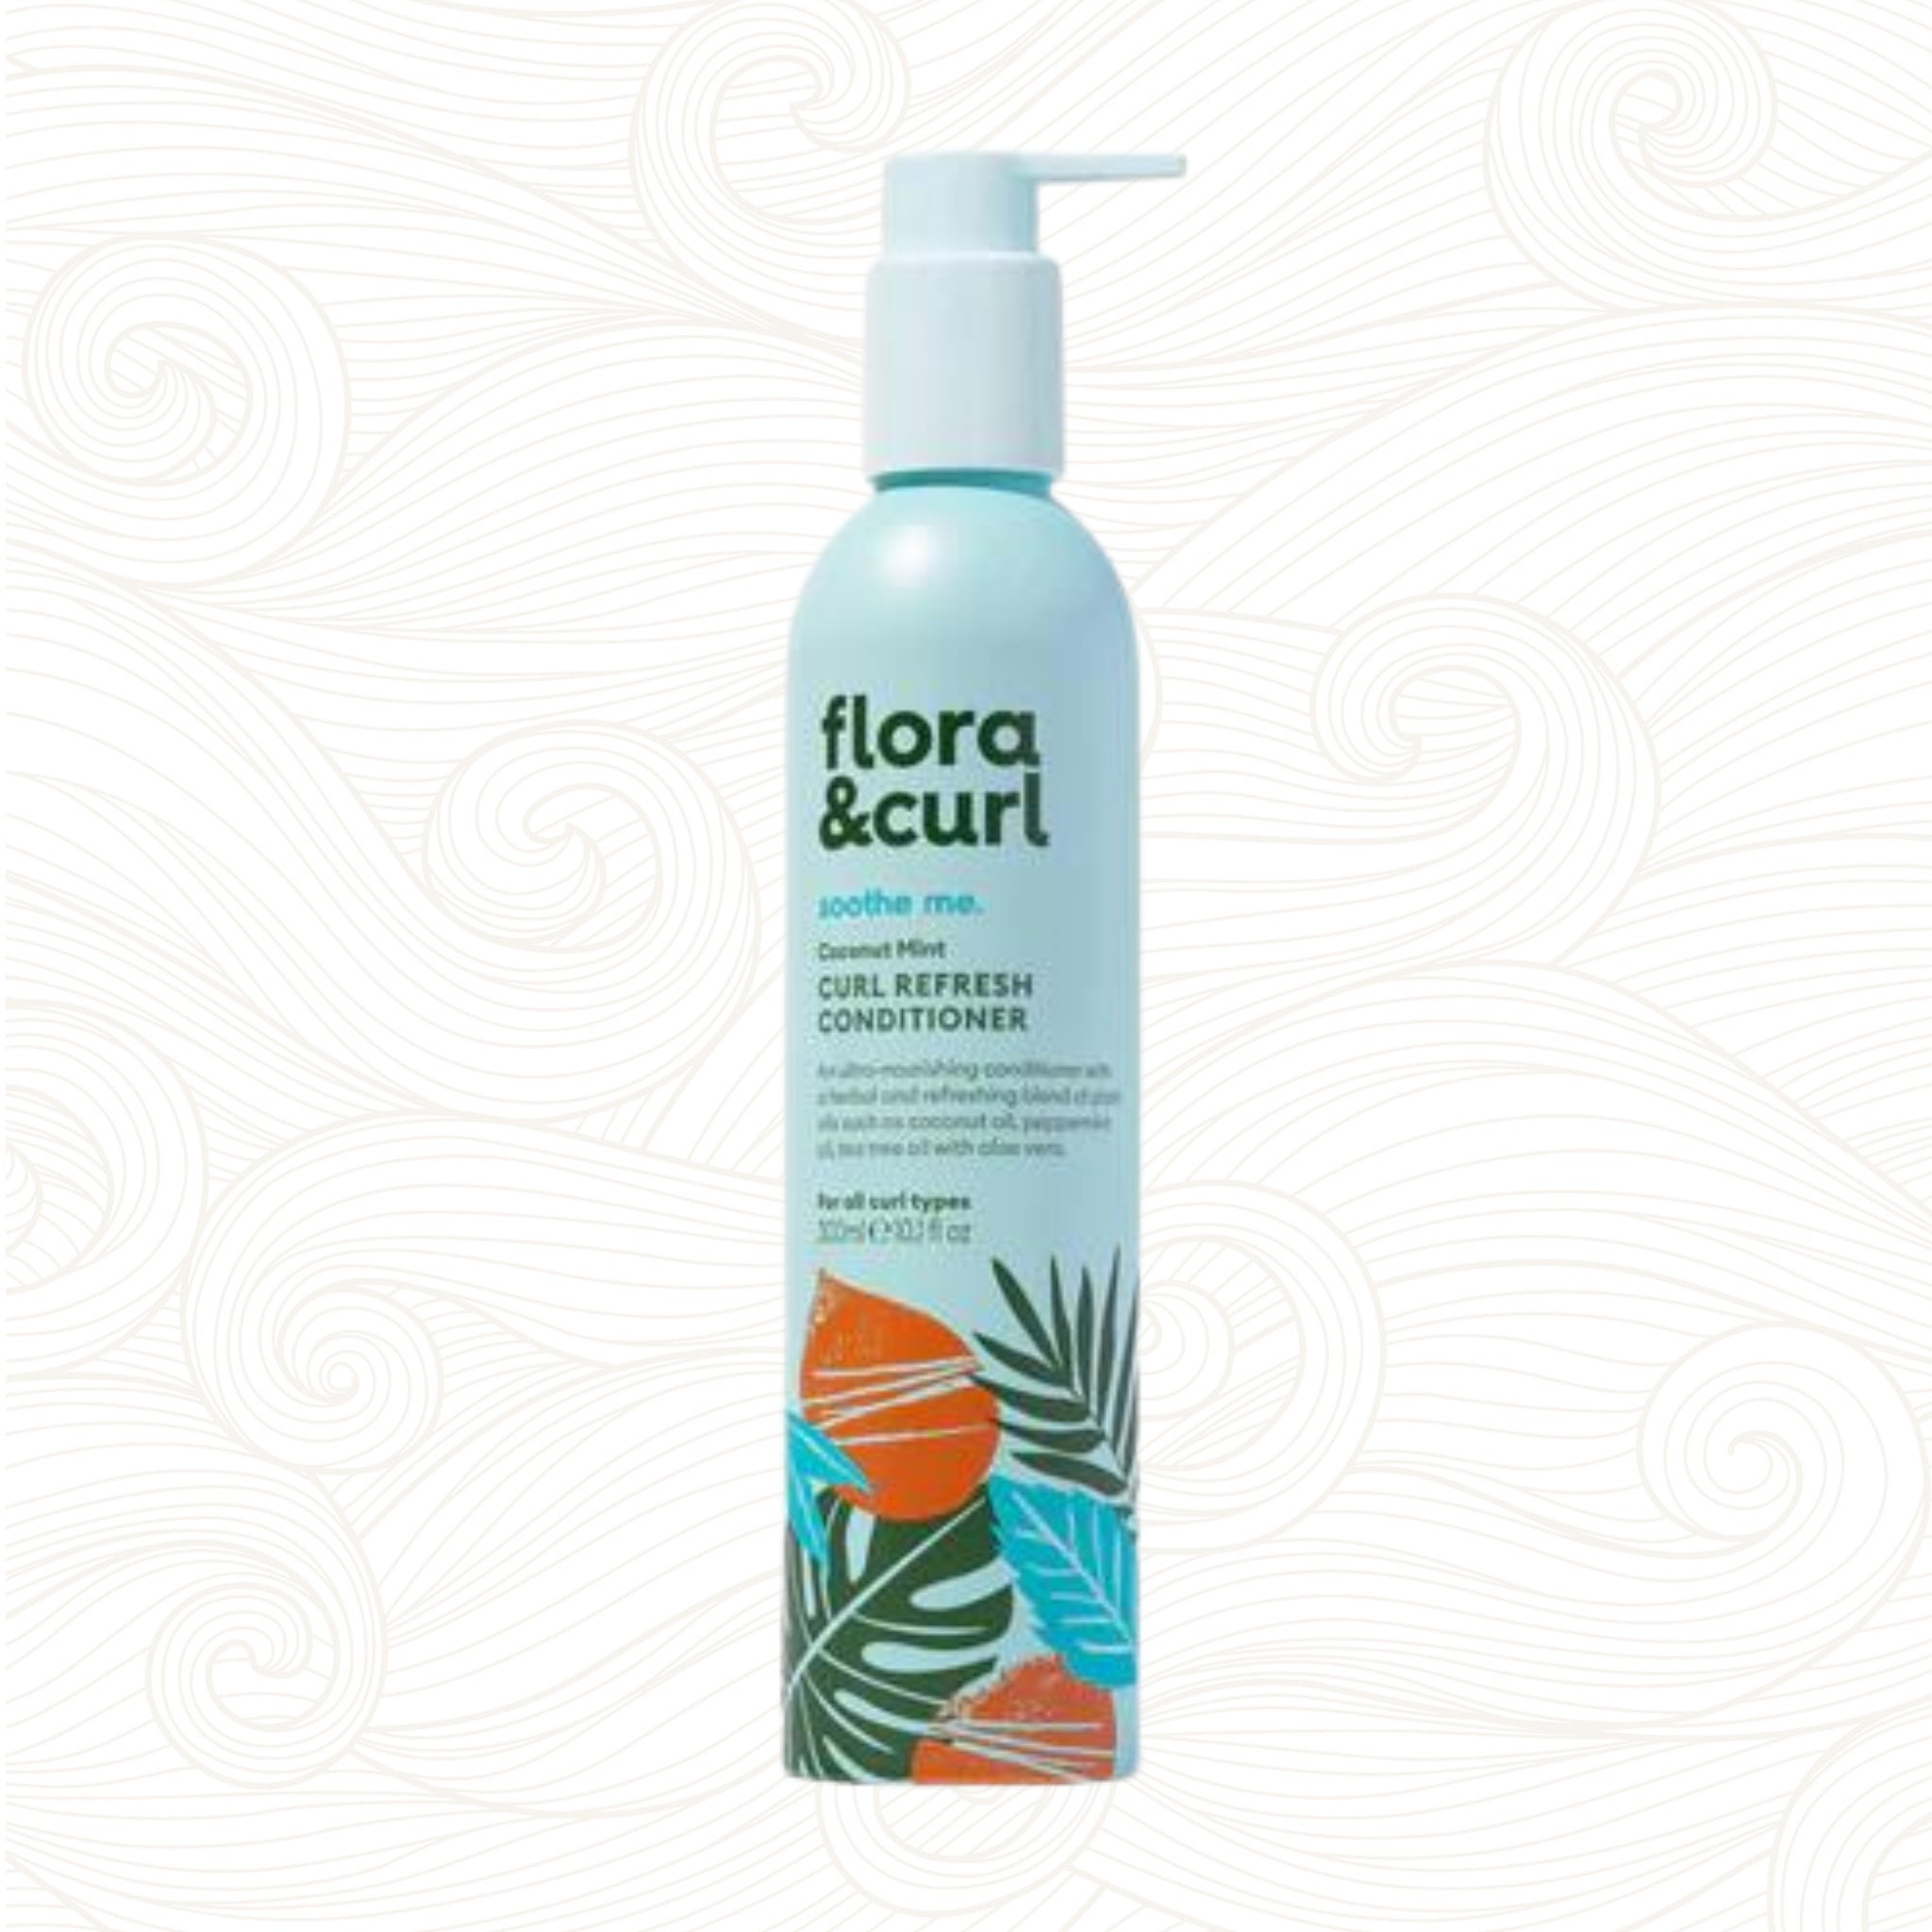 Flora & Curl | Coconut Mint Curl Refresh Conditioner /10oz